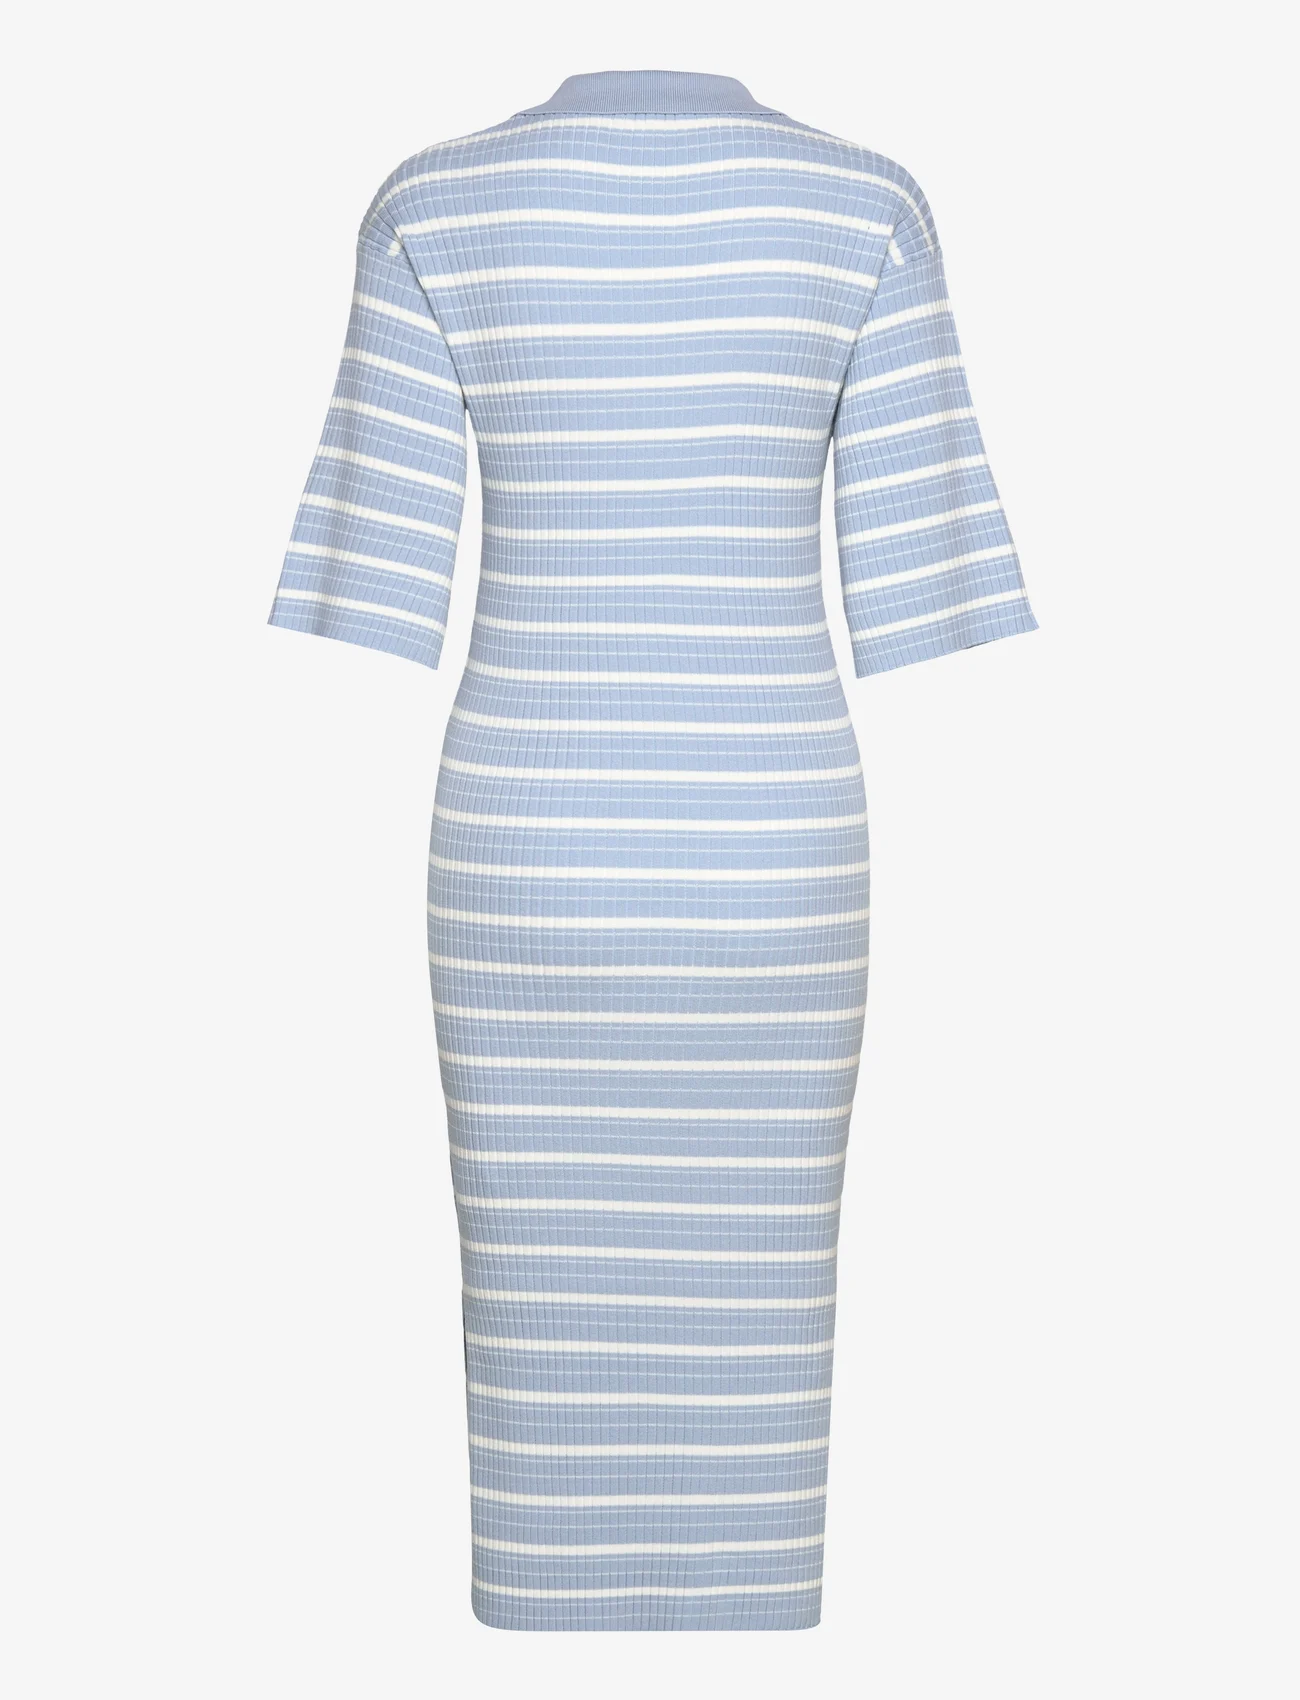 Esme Studios - ESAura Polo Dress Knit - kotelomekot - blue fog stripes - 1